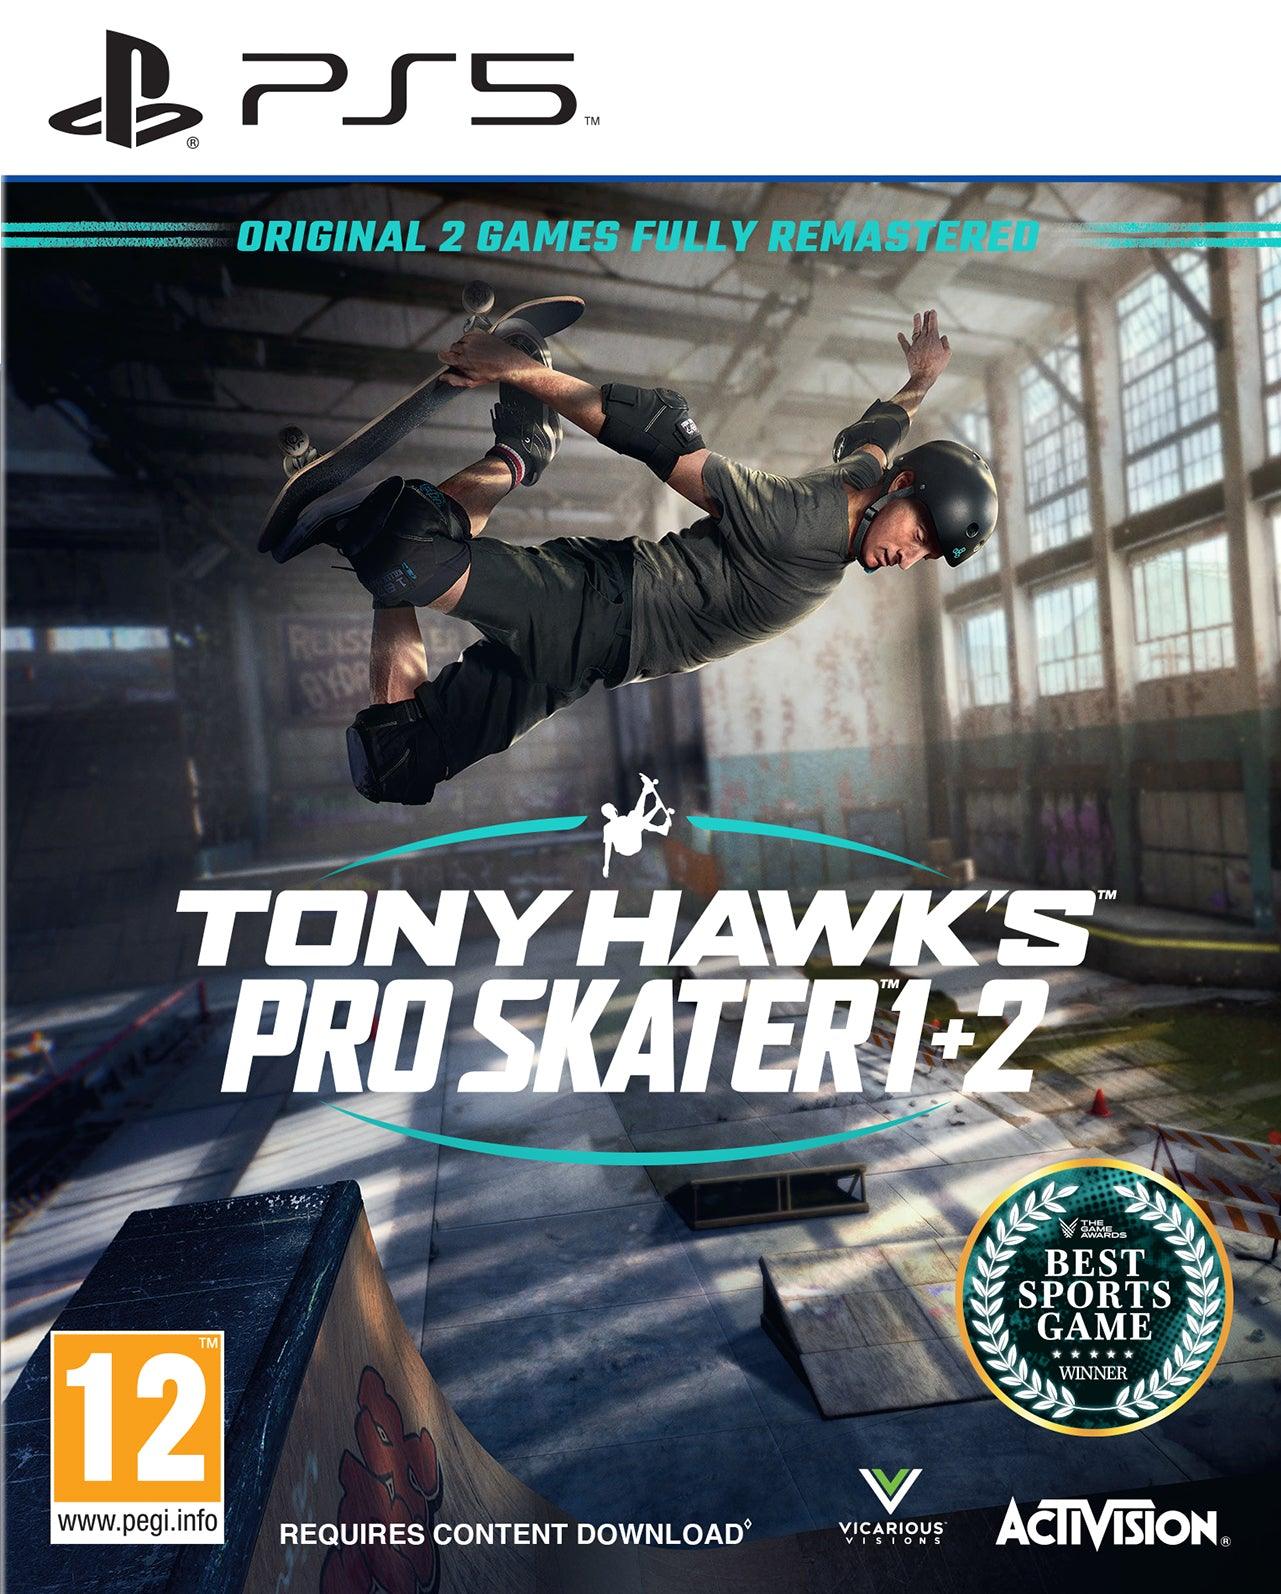 Tony Hawks Pro Skater 1&2 - Want a New Gadget